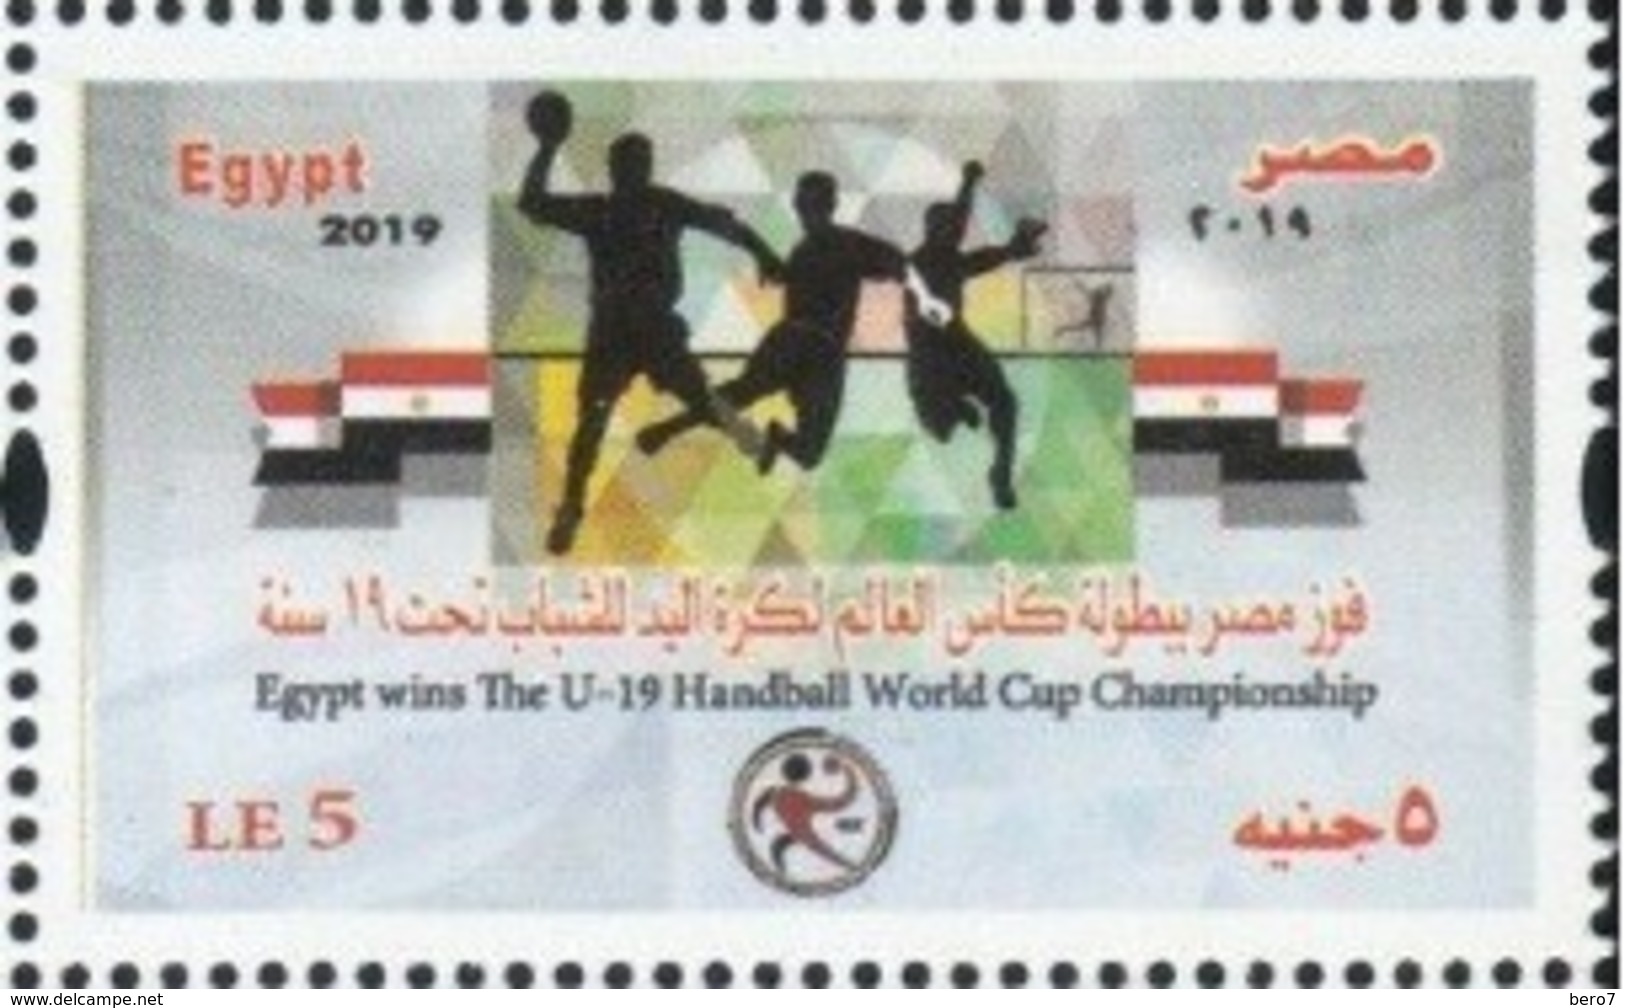 Egypt- 5 LE - Egypt Wins The U-19 Handball World Cup Championship - Unused MNH - [2019] (Egypte) (Egitto) (Ägypten) - Neufs